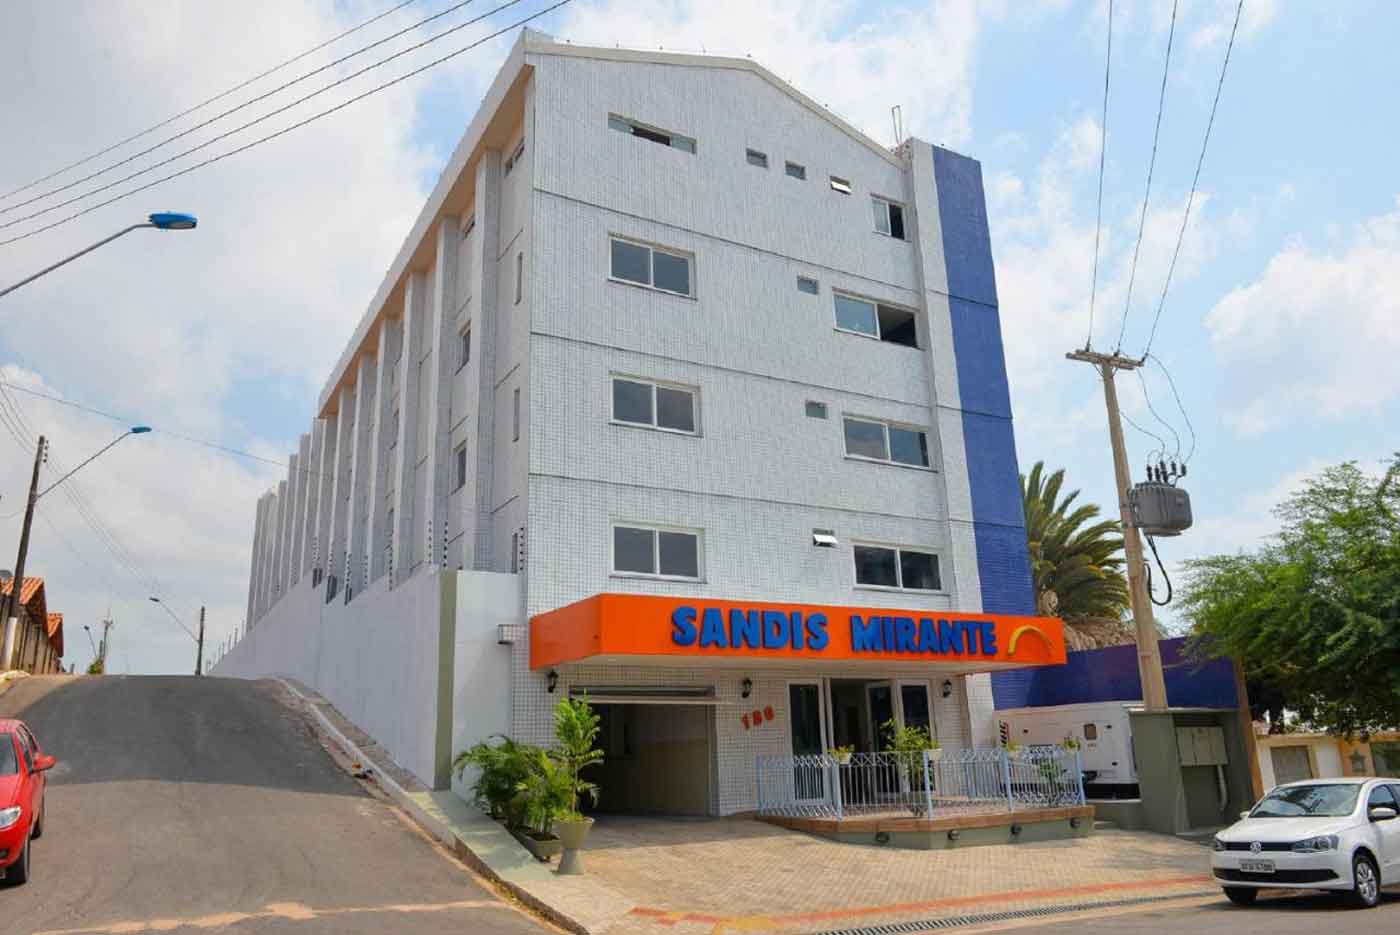 Hotel Sandis Mirante - Hotéis em Santarém